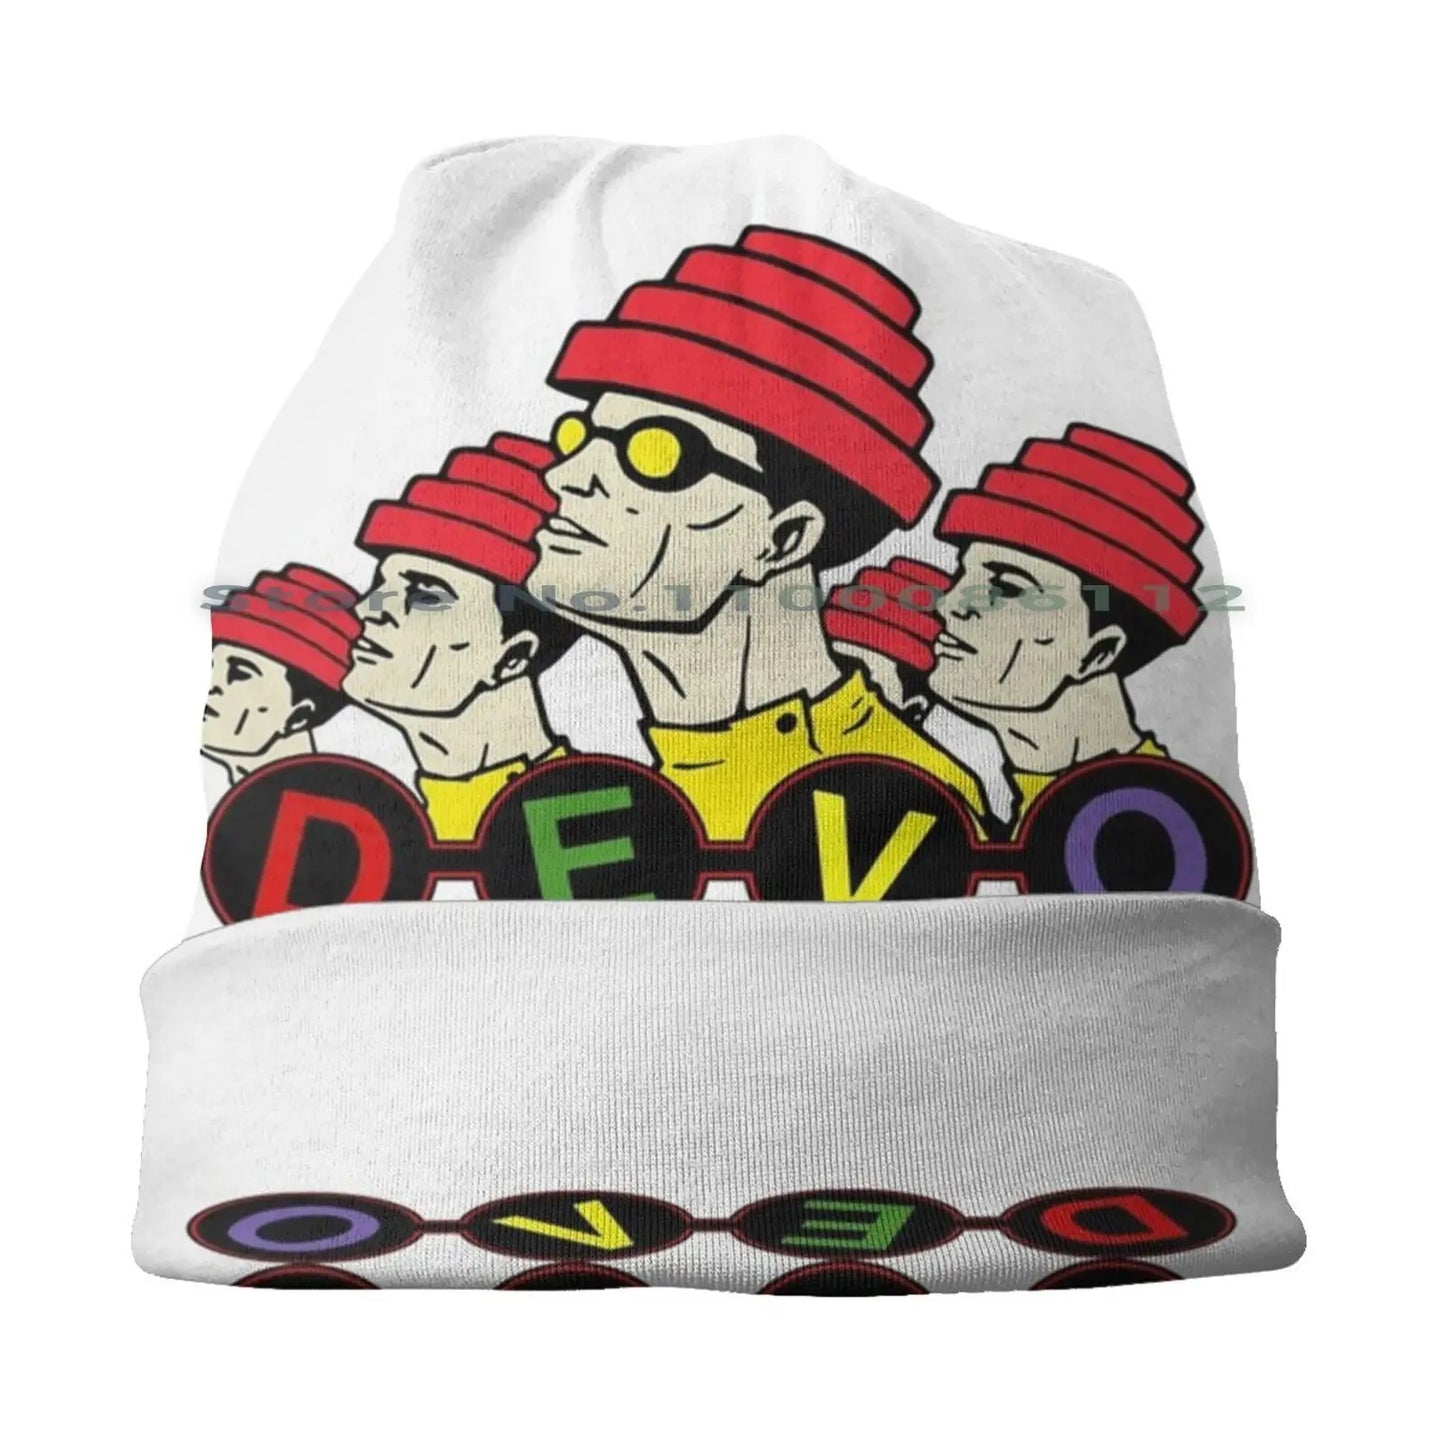 Devo Duty Now American Electronic New Wave Punk Rock Band Bucket Hat Sun Cap Whip It Freedom of Choice - Lizard Vigilante